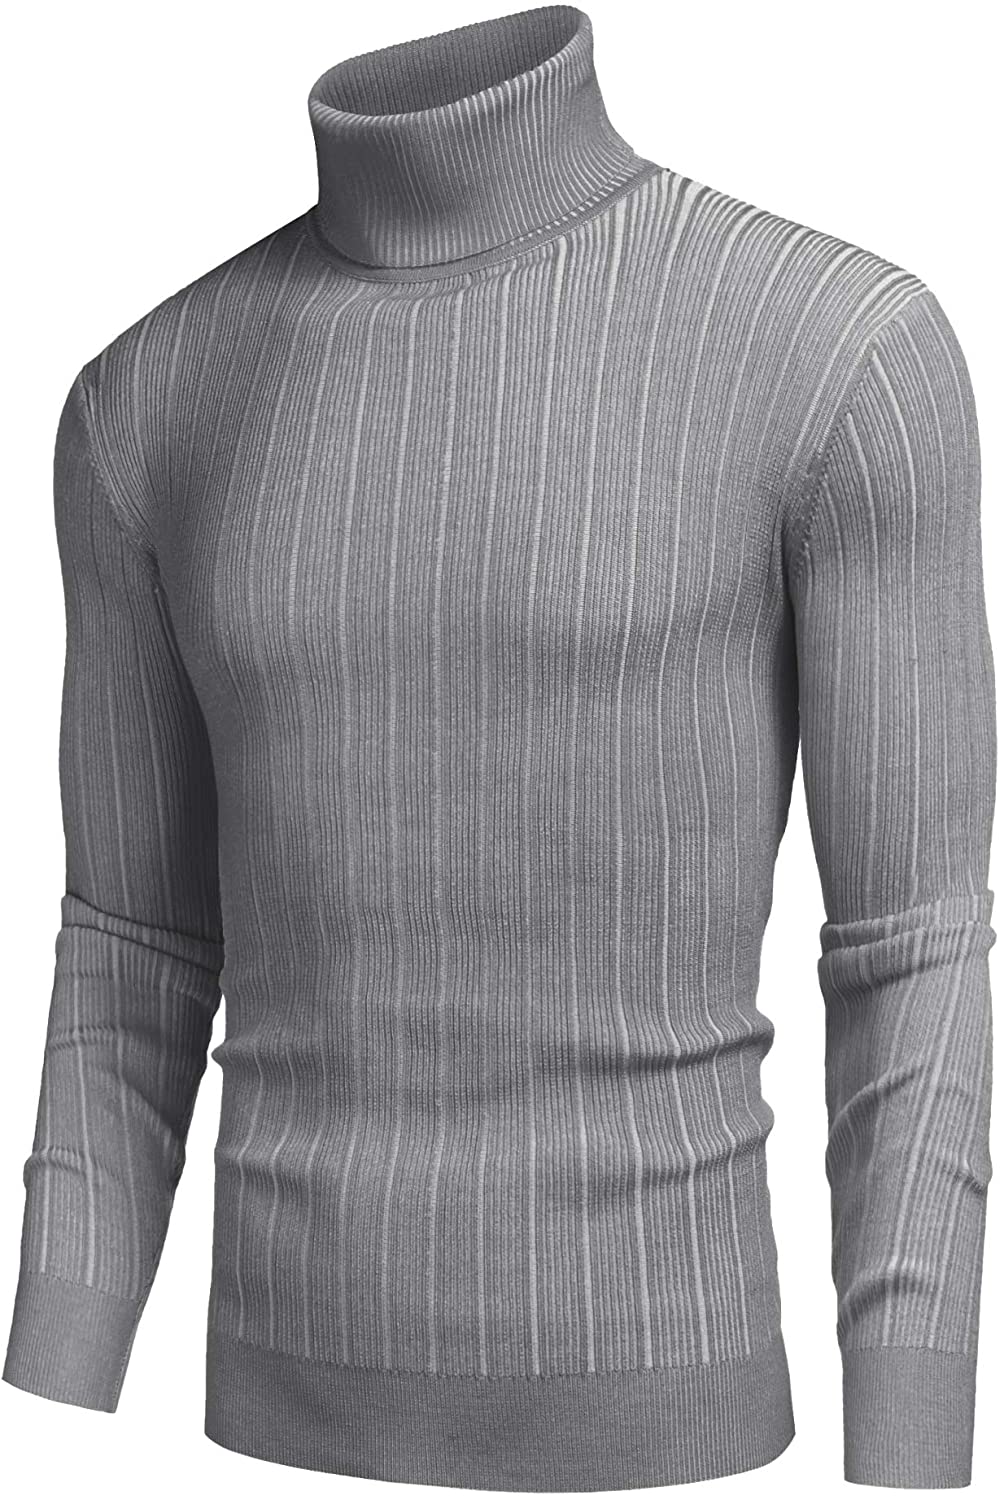 COOFANDY Men's Slim Fit Turtleneck Sweater Cotton Ribbed High Neck ...